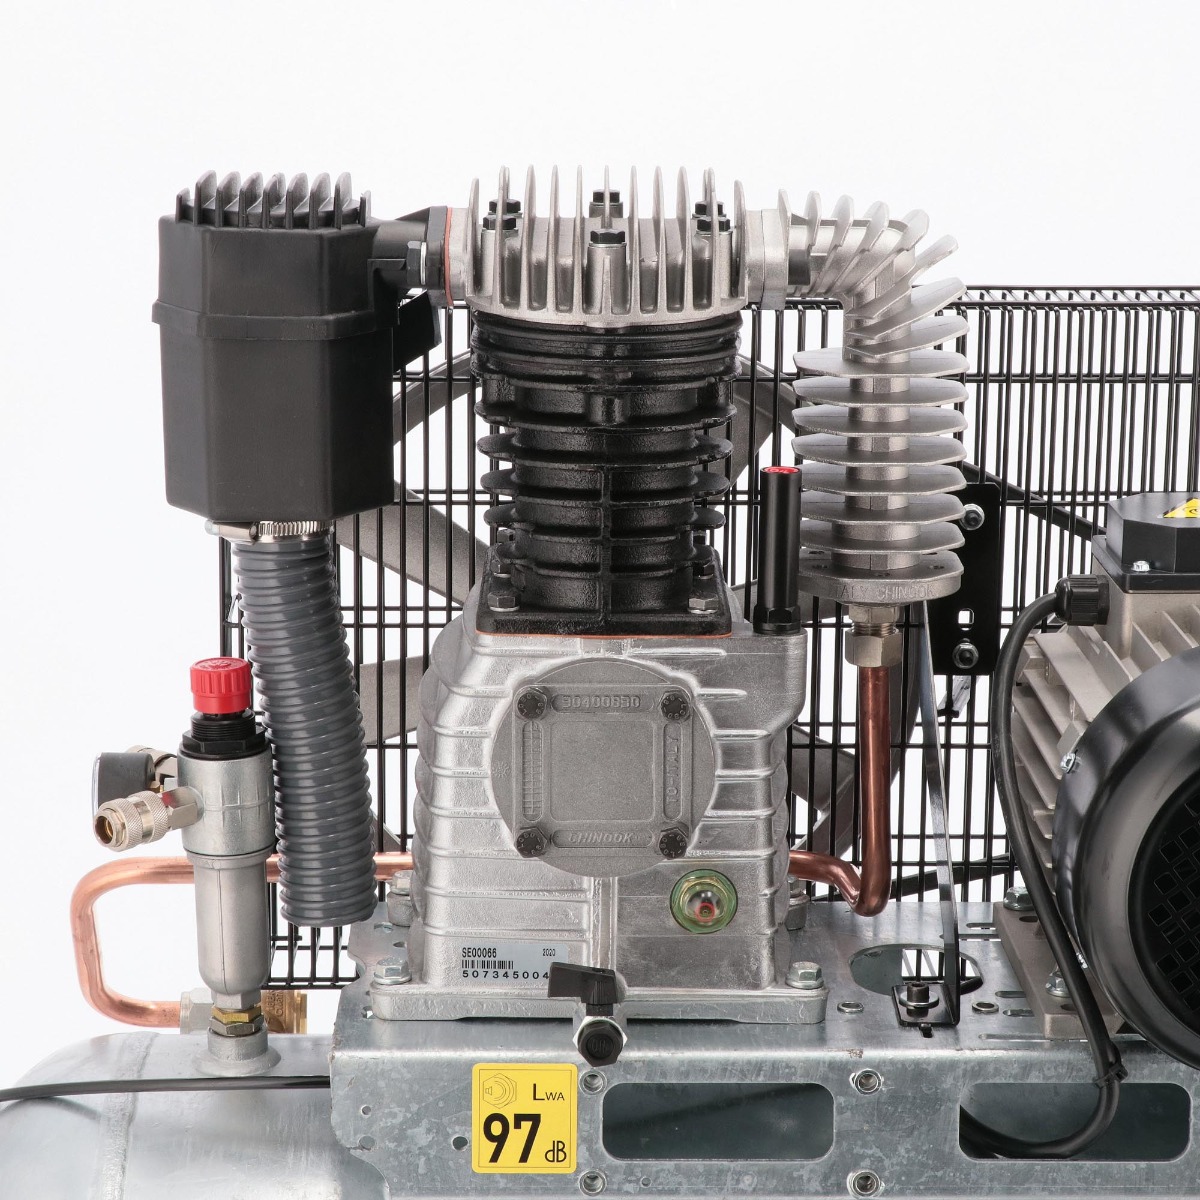 G 625-90 Pro compressor